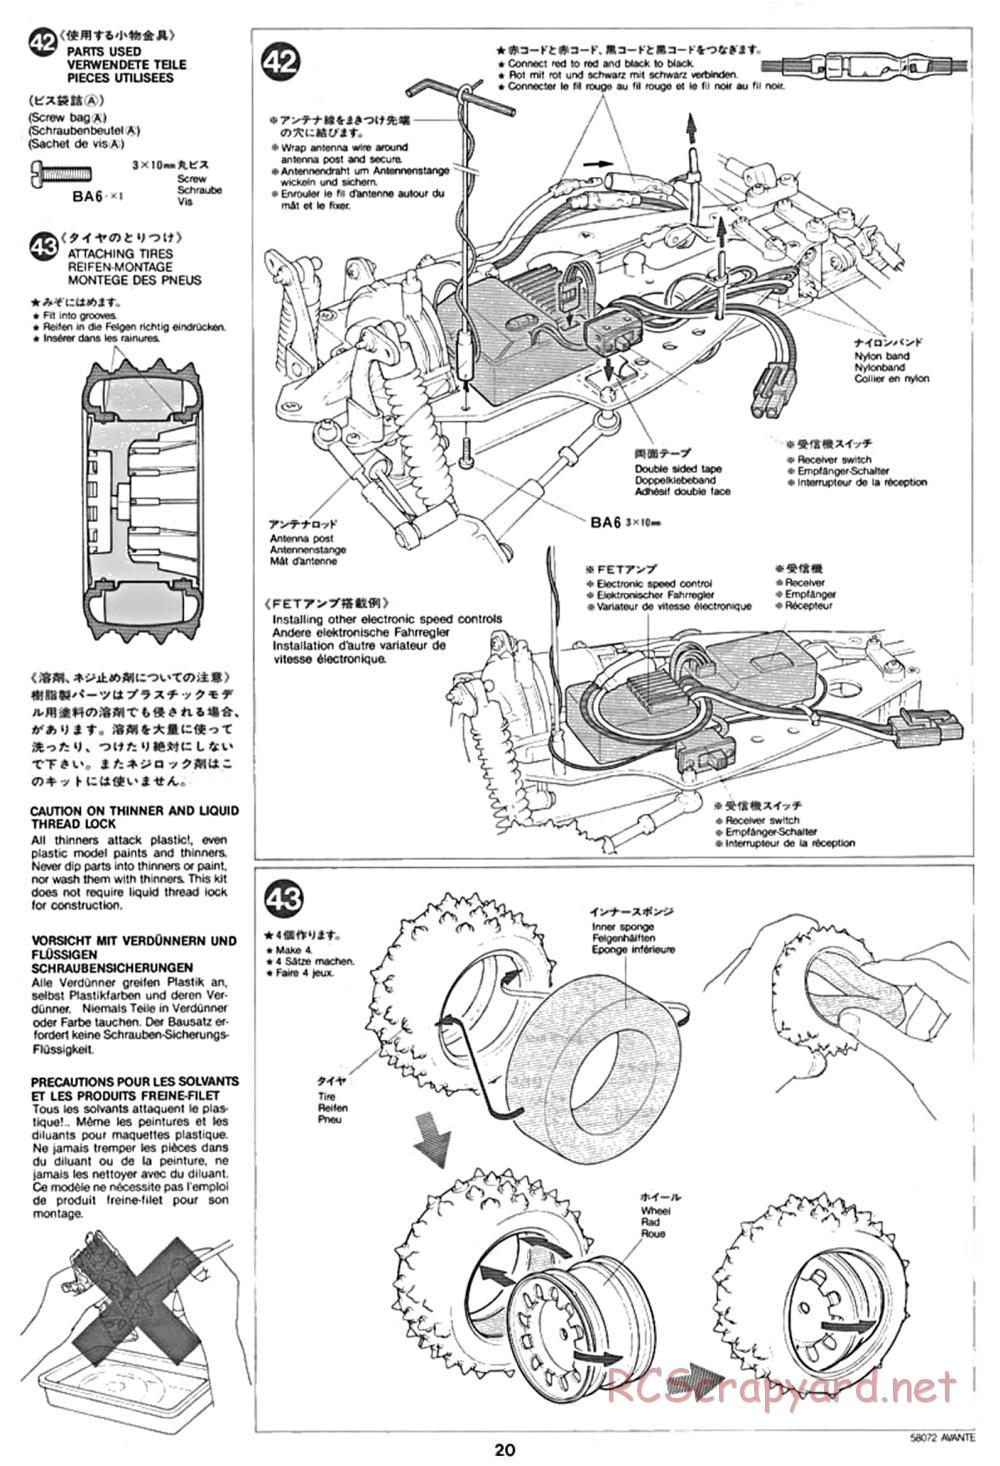 Tamiya - Avante - 58072 - Manual - Page 20